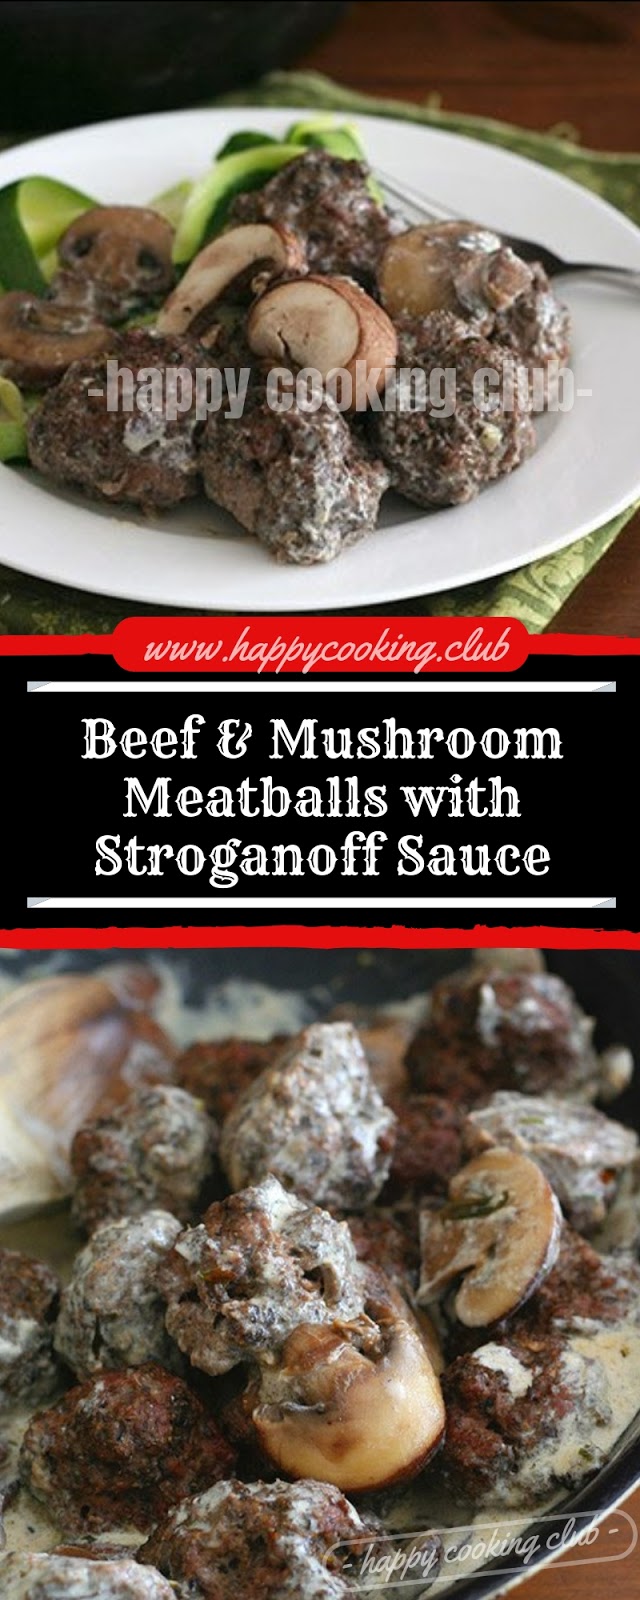 Beef & Mushroom Meatballs with Stroganoff Sauce